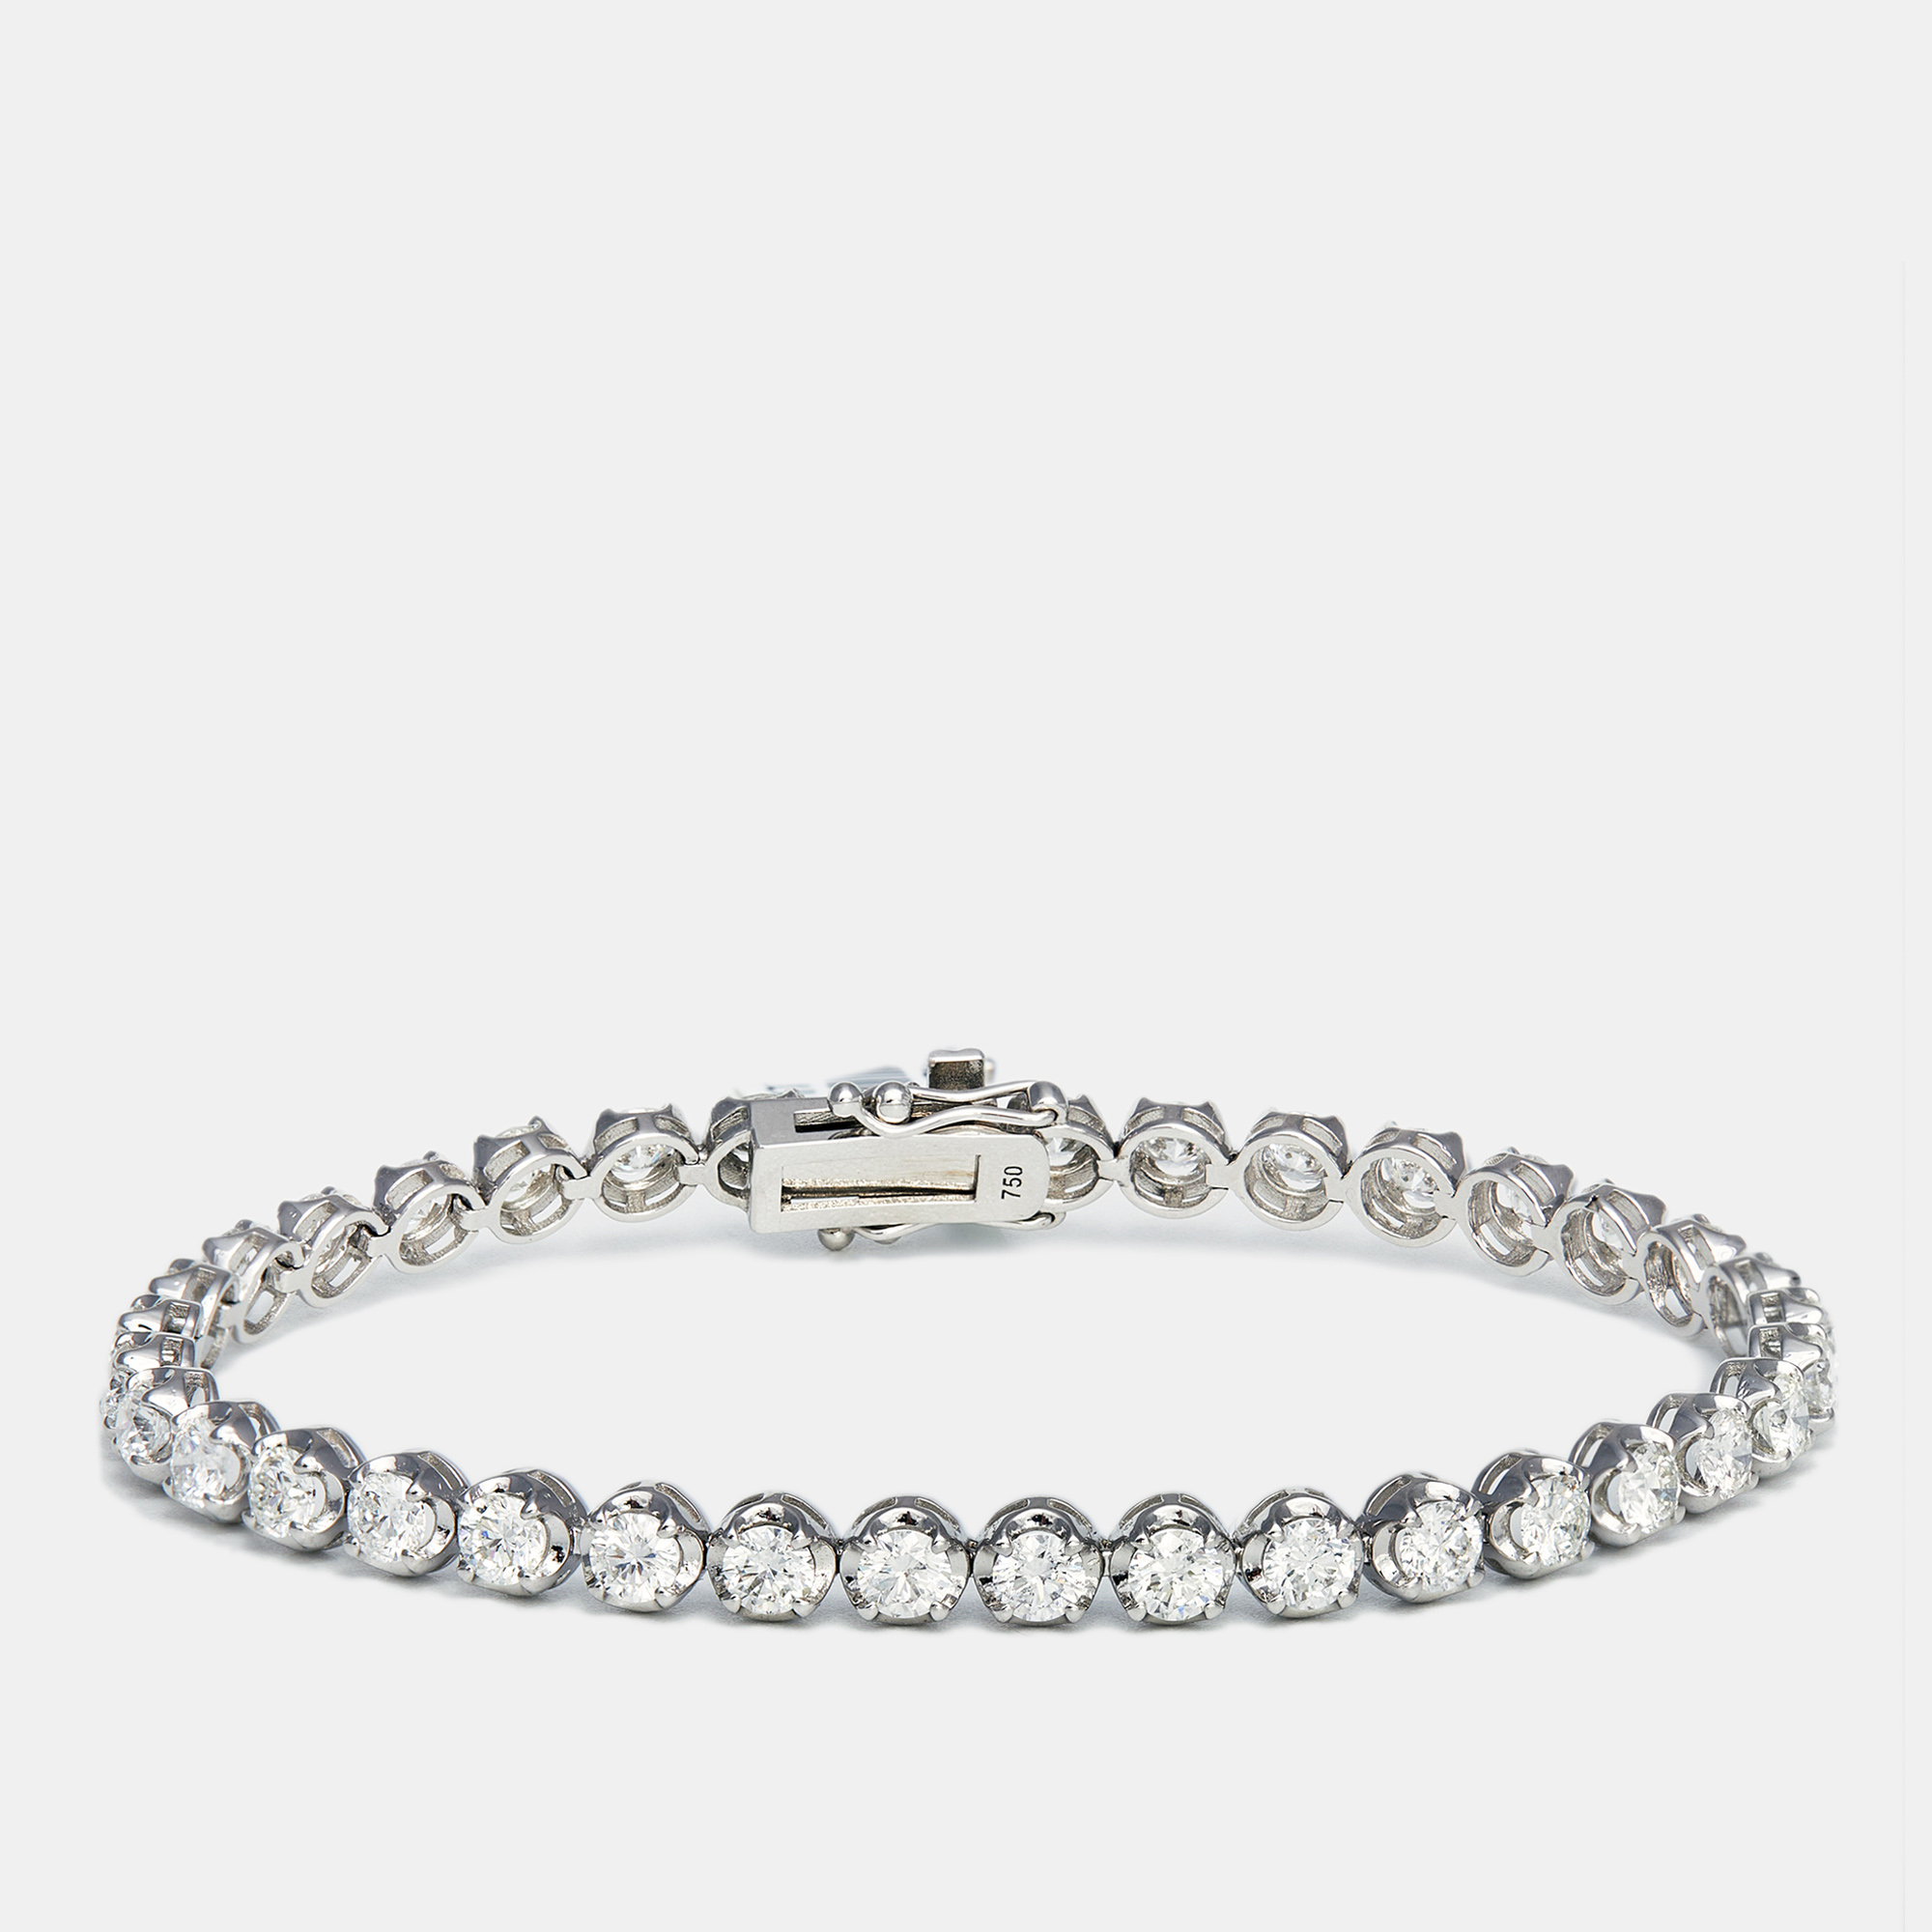 The diamond edit 18k white gold diamonds 5.80 cts elegant tennis bracelet